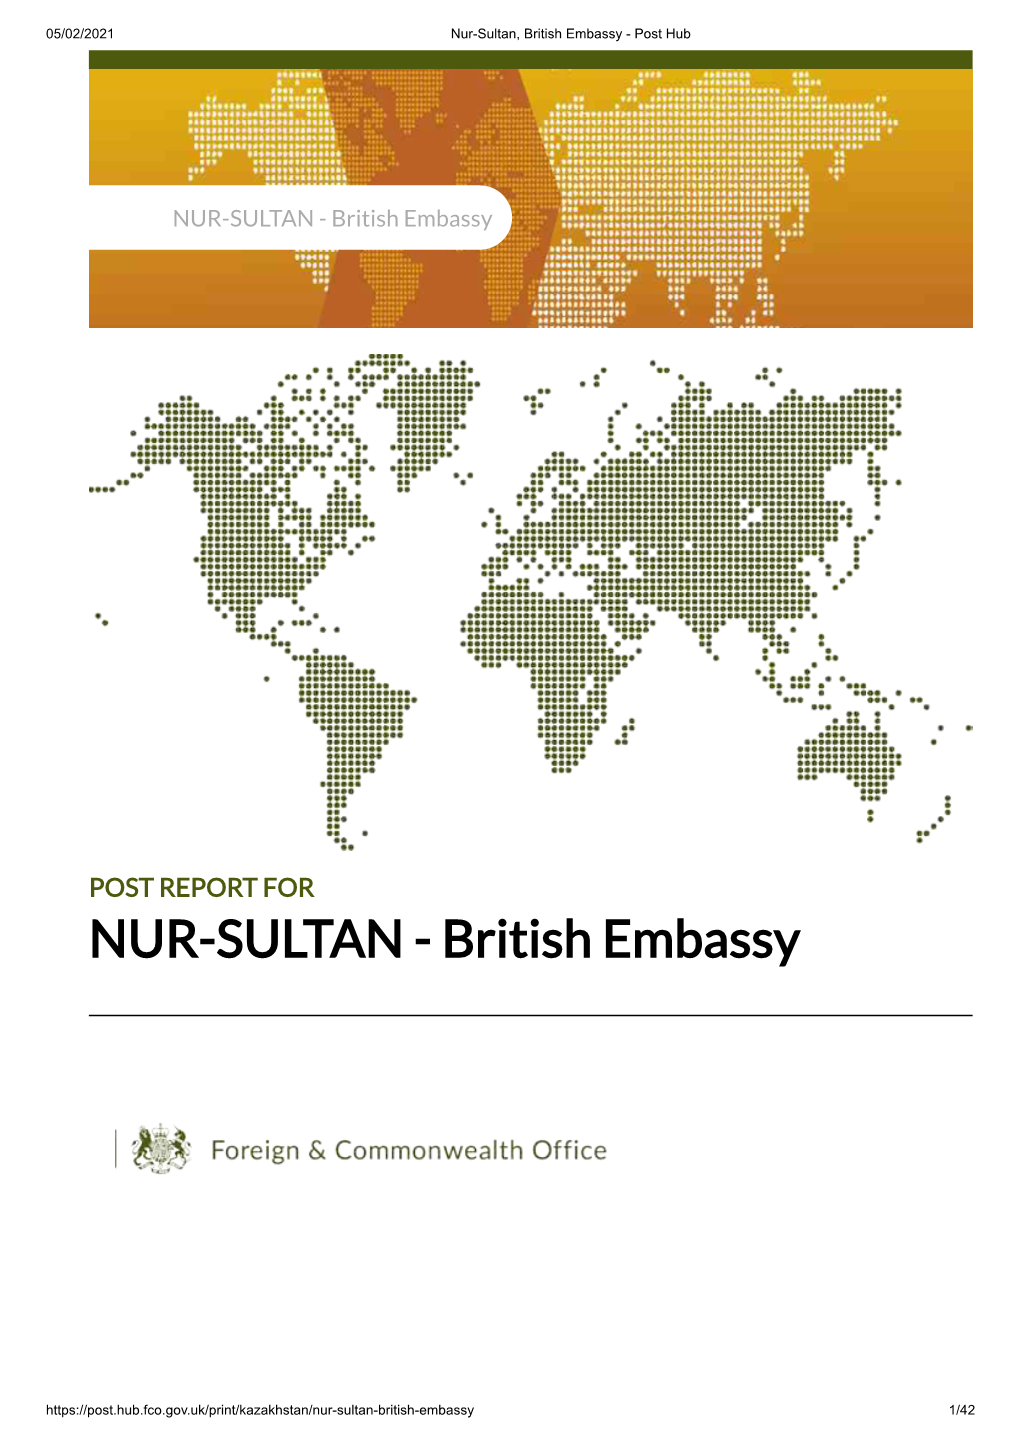 British Embassy - Post Hub